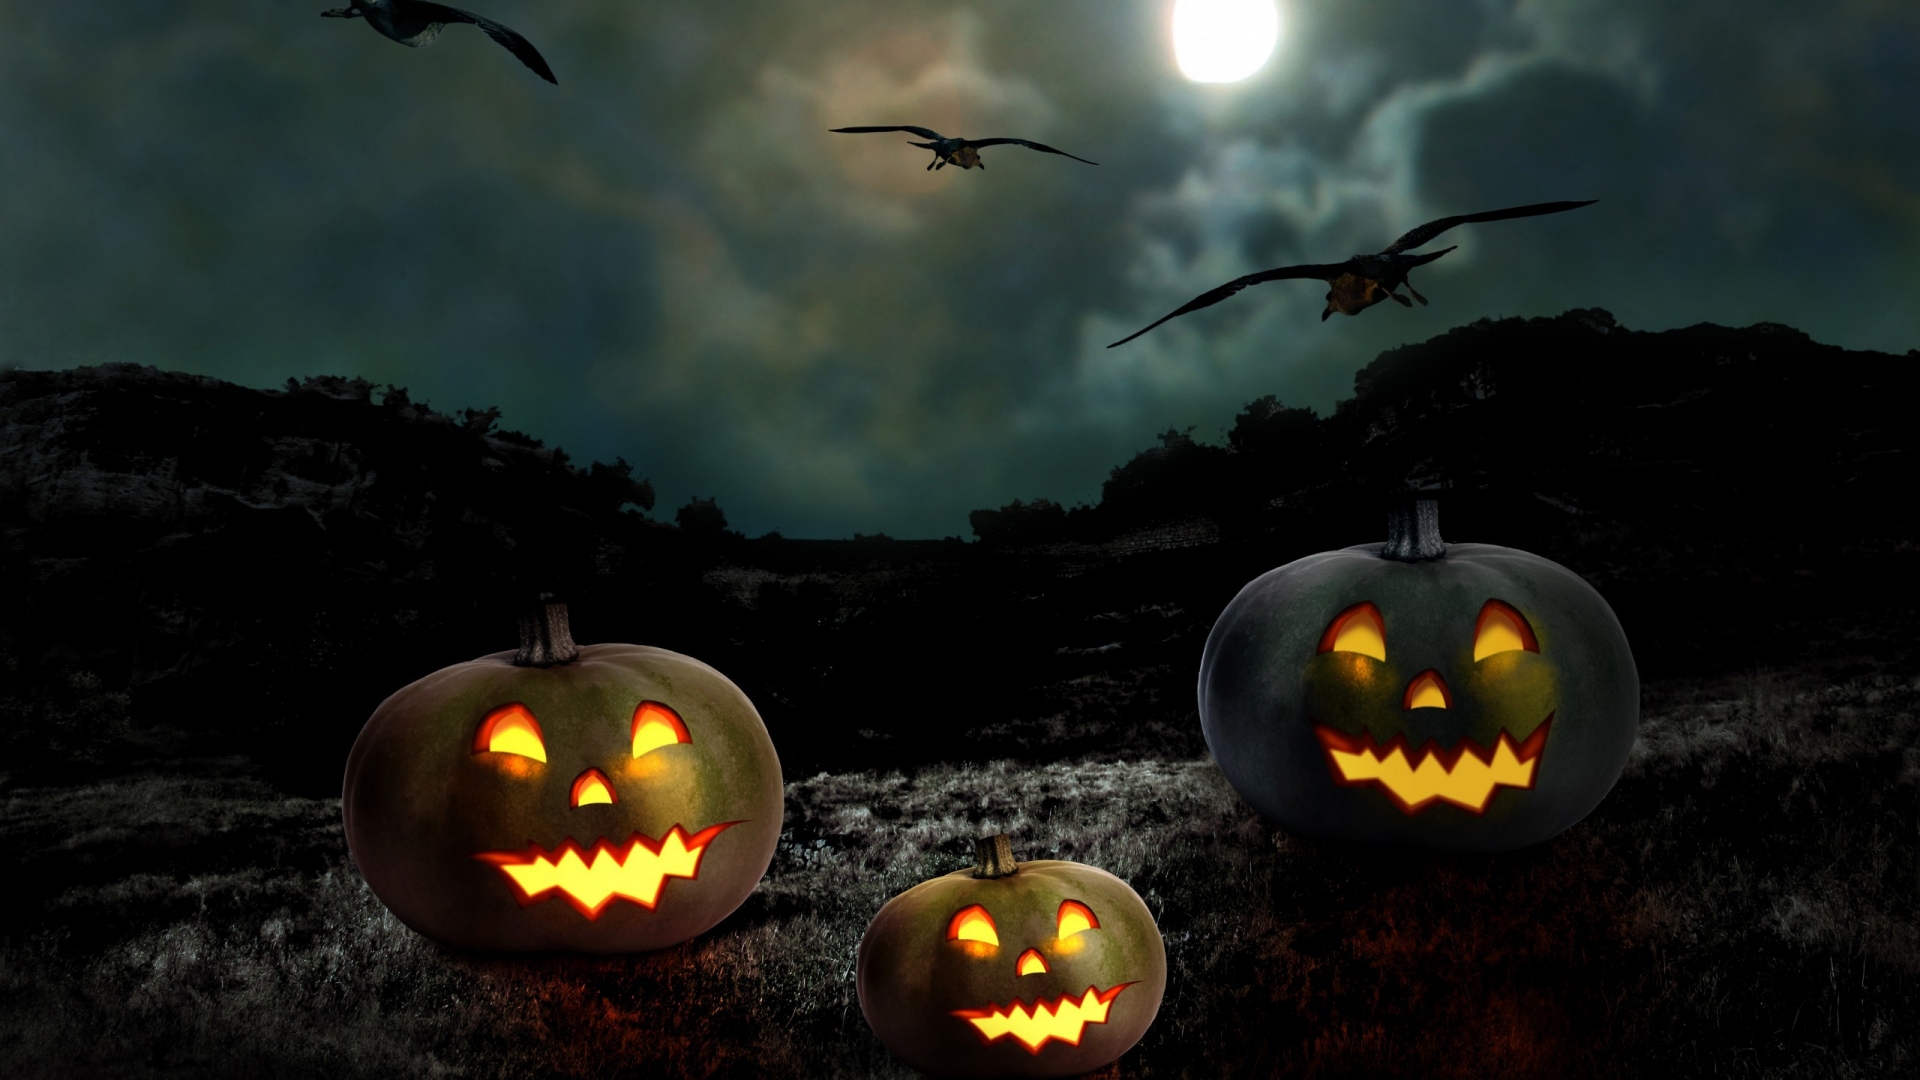 Halloween Pumpkin Smile for 1920 x 1080 HDTV 1080p resolution